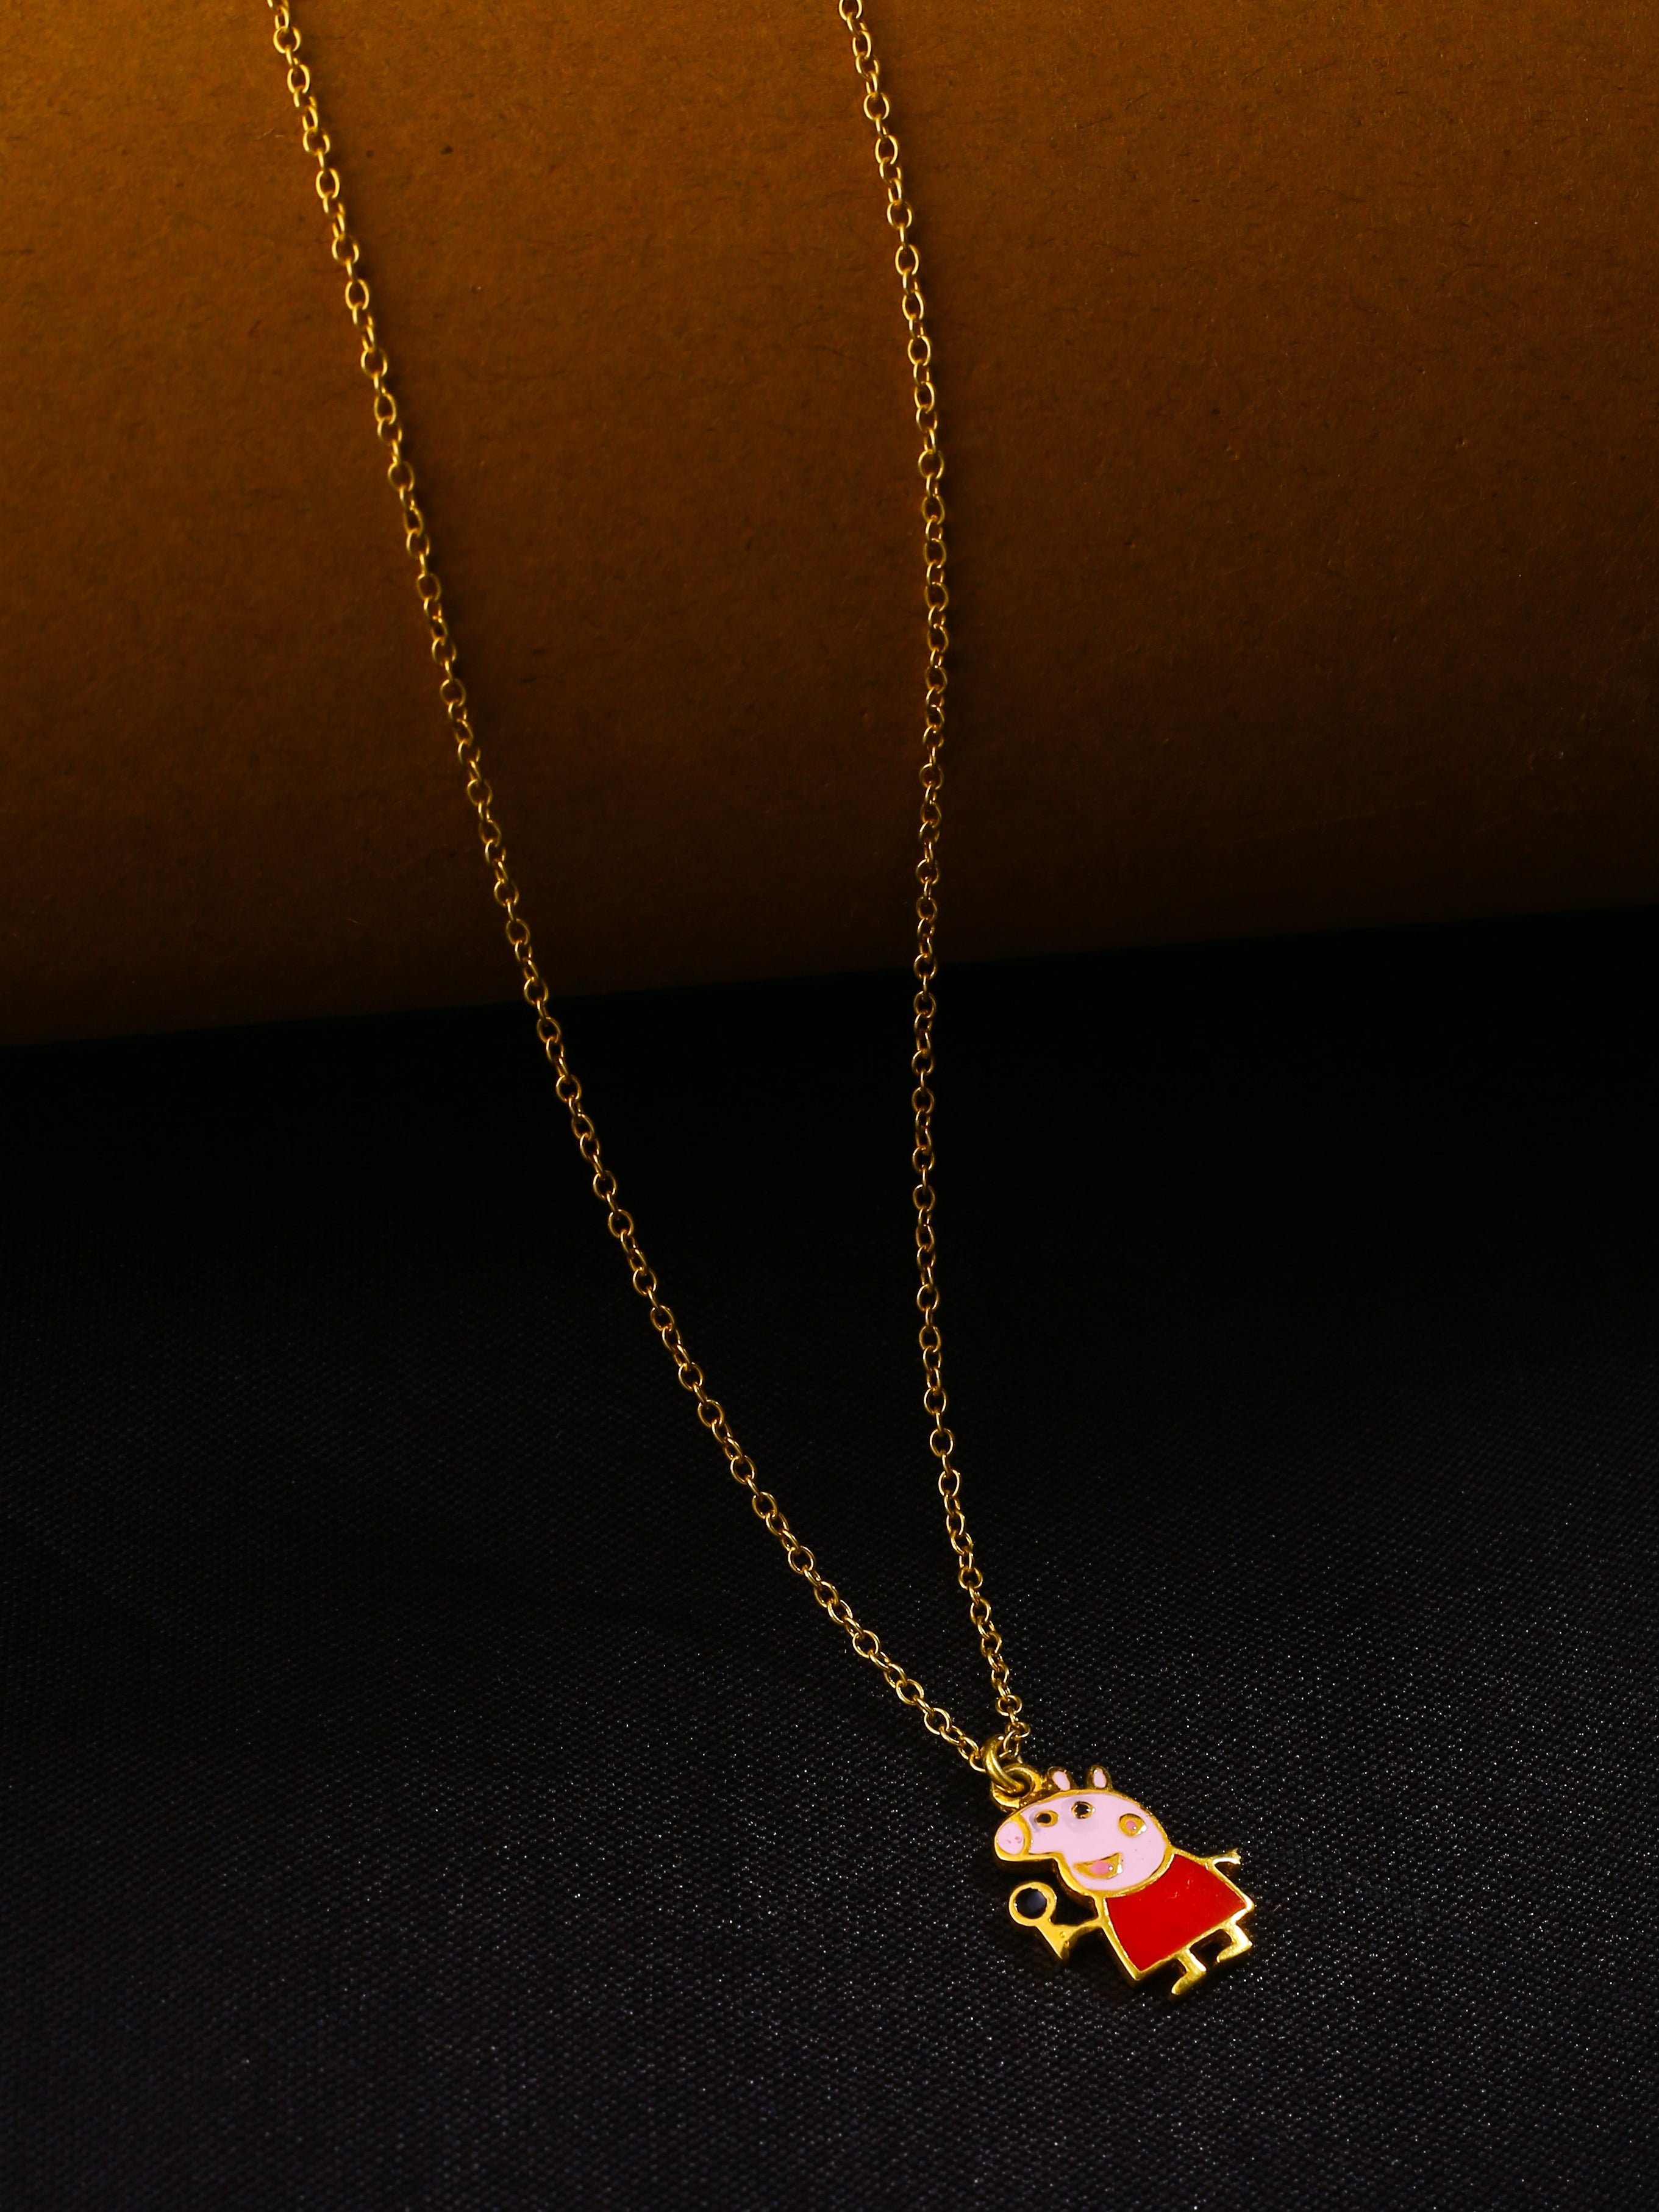 Pinky Pig Pendant - Heartwarming Jewellery for Kids